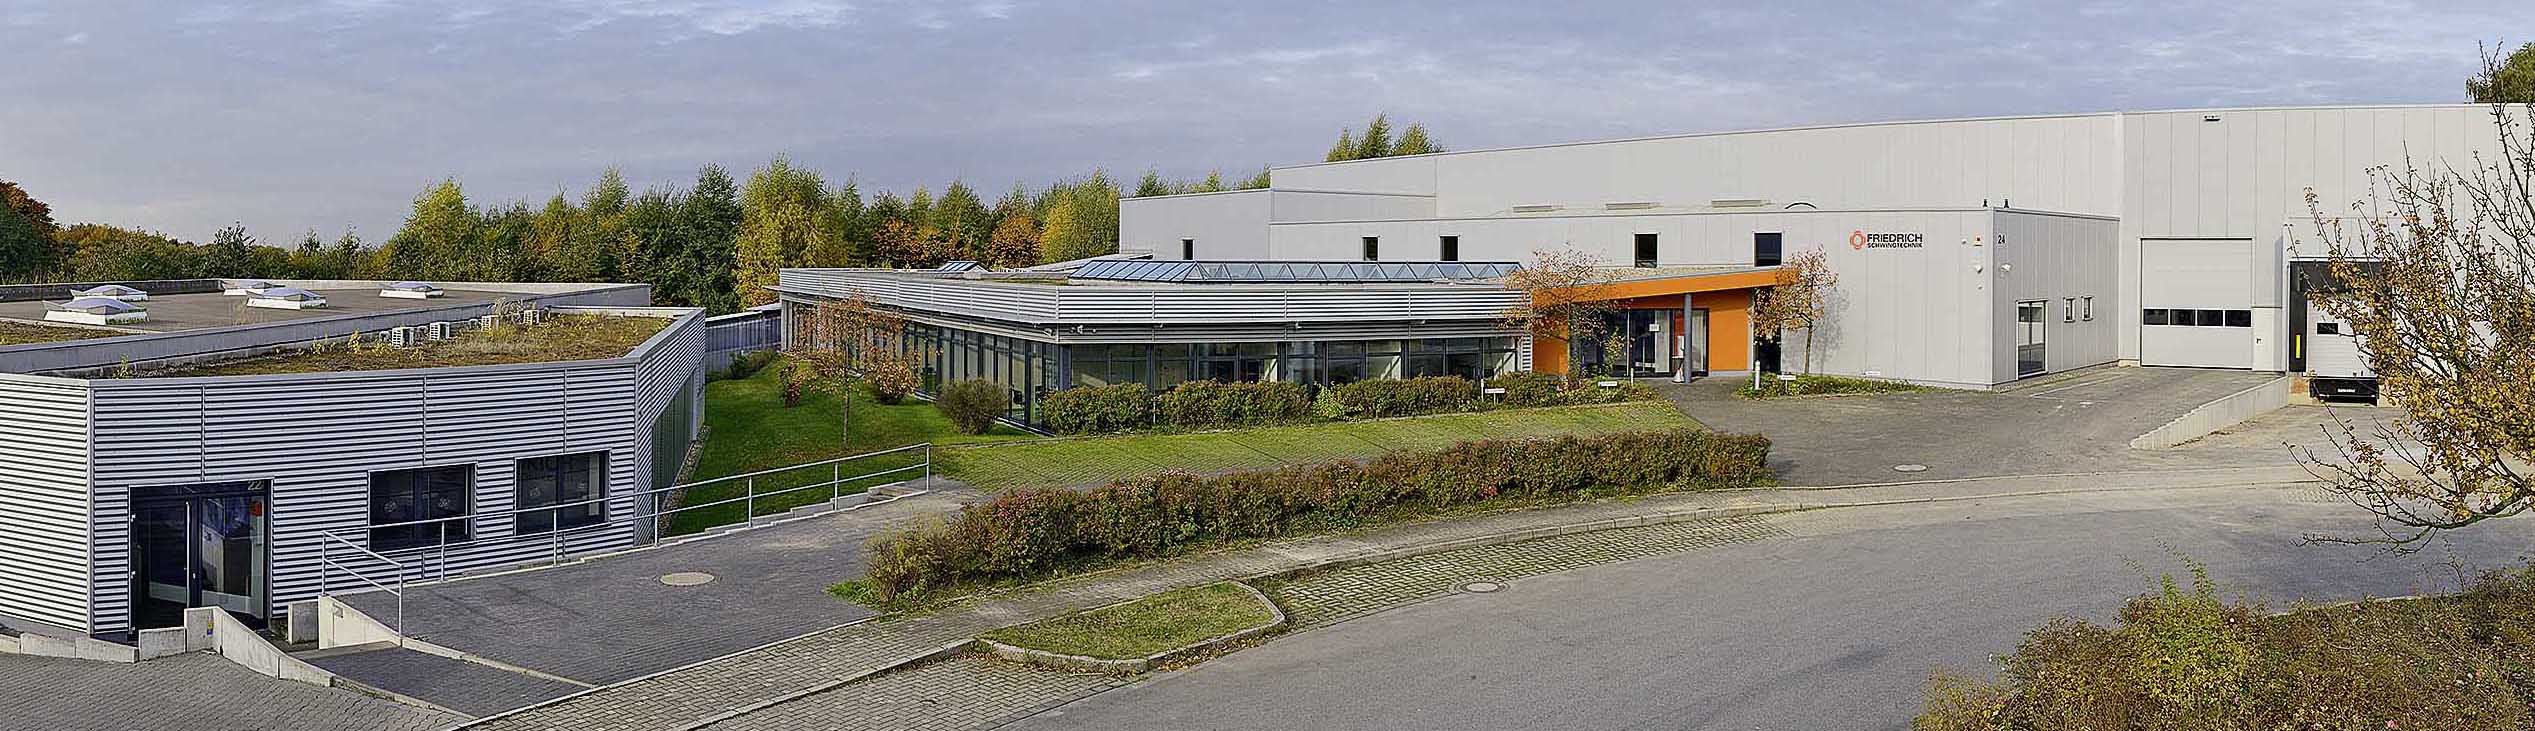 Friedrich Schwingtechnik GmbH, Firmengebäude in Haan